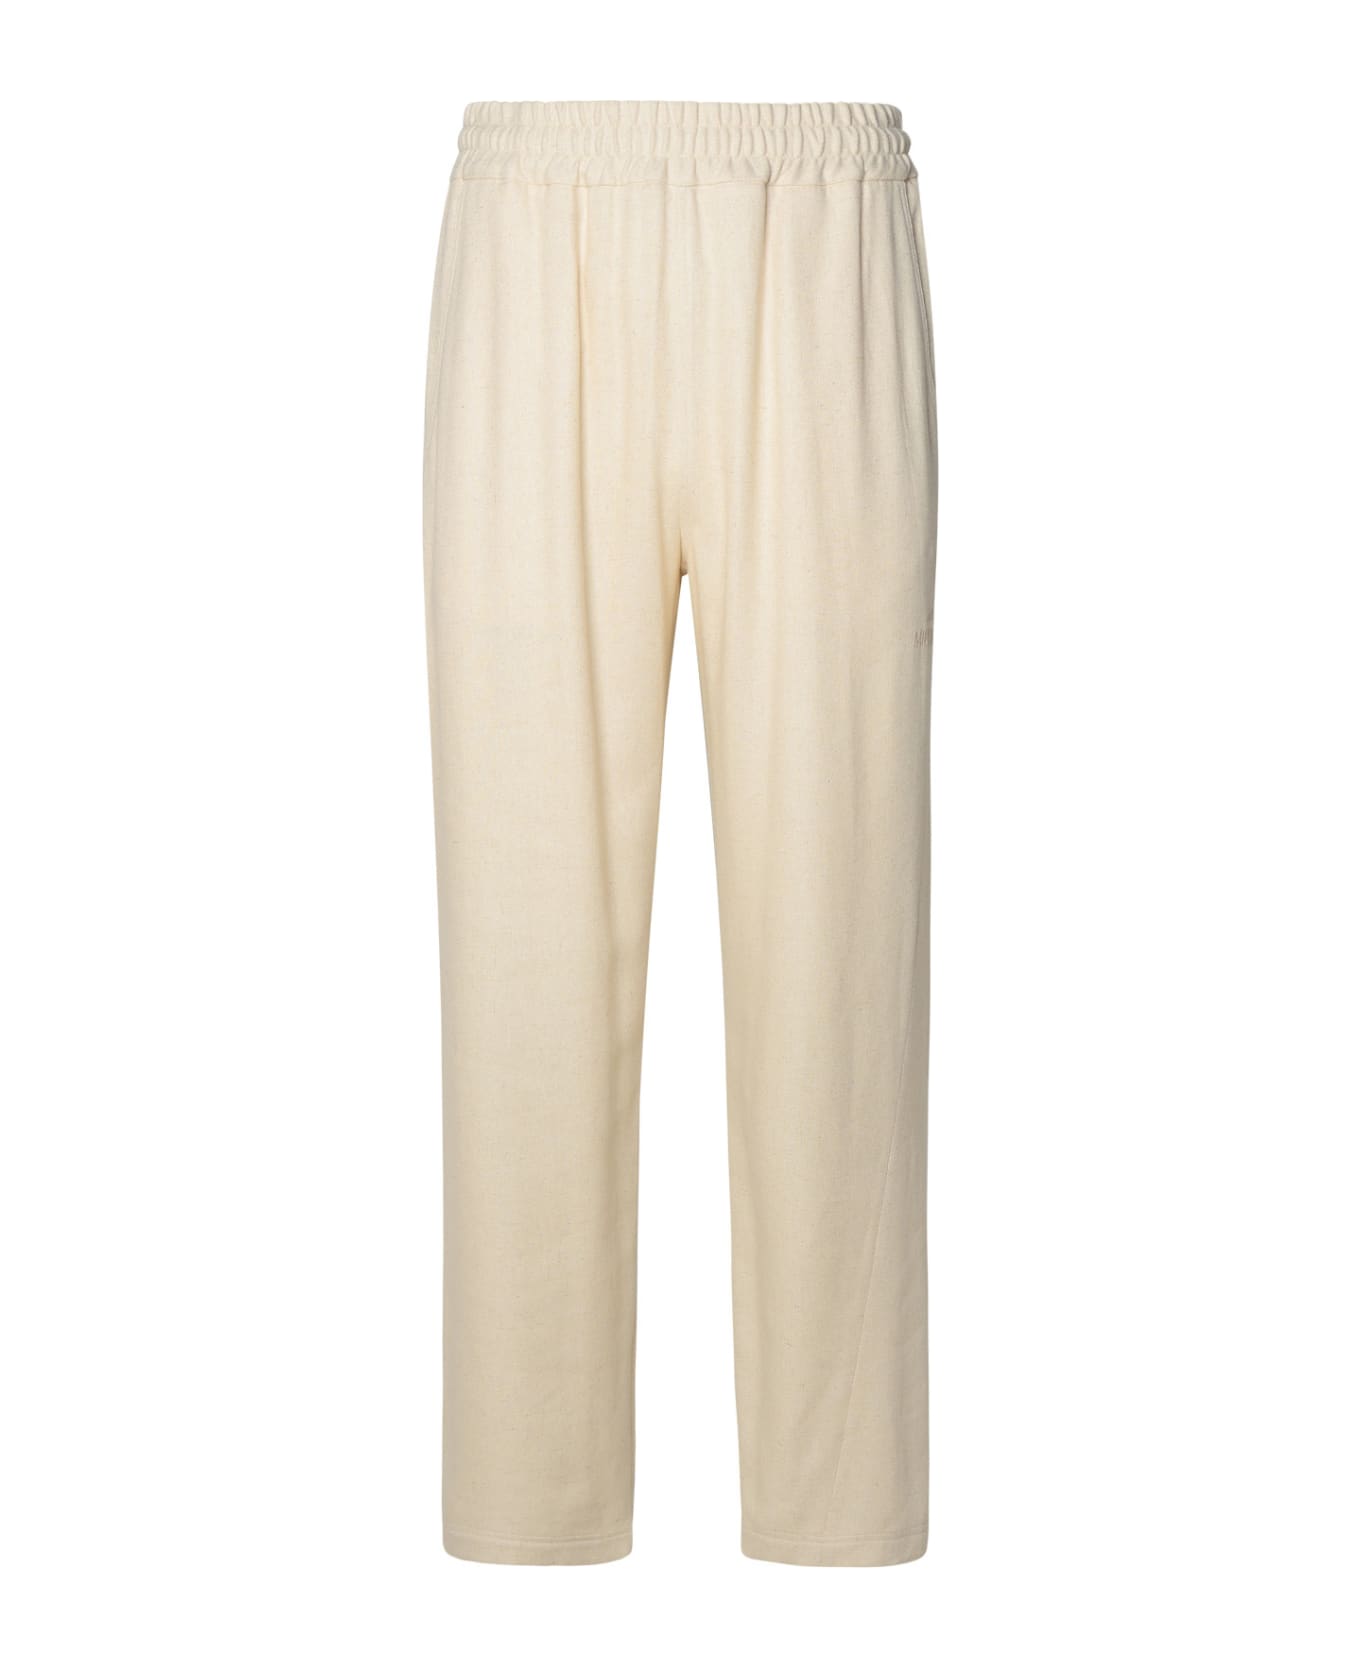 GCDS Ivory Linen Blend Trousers - Bianco sporco